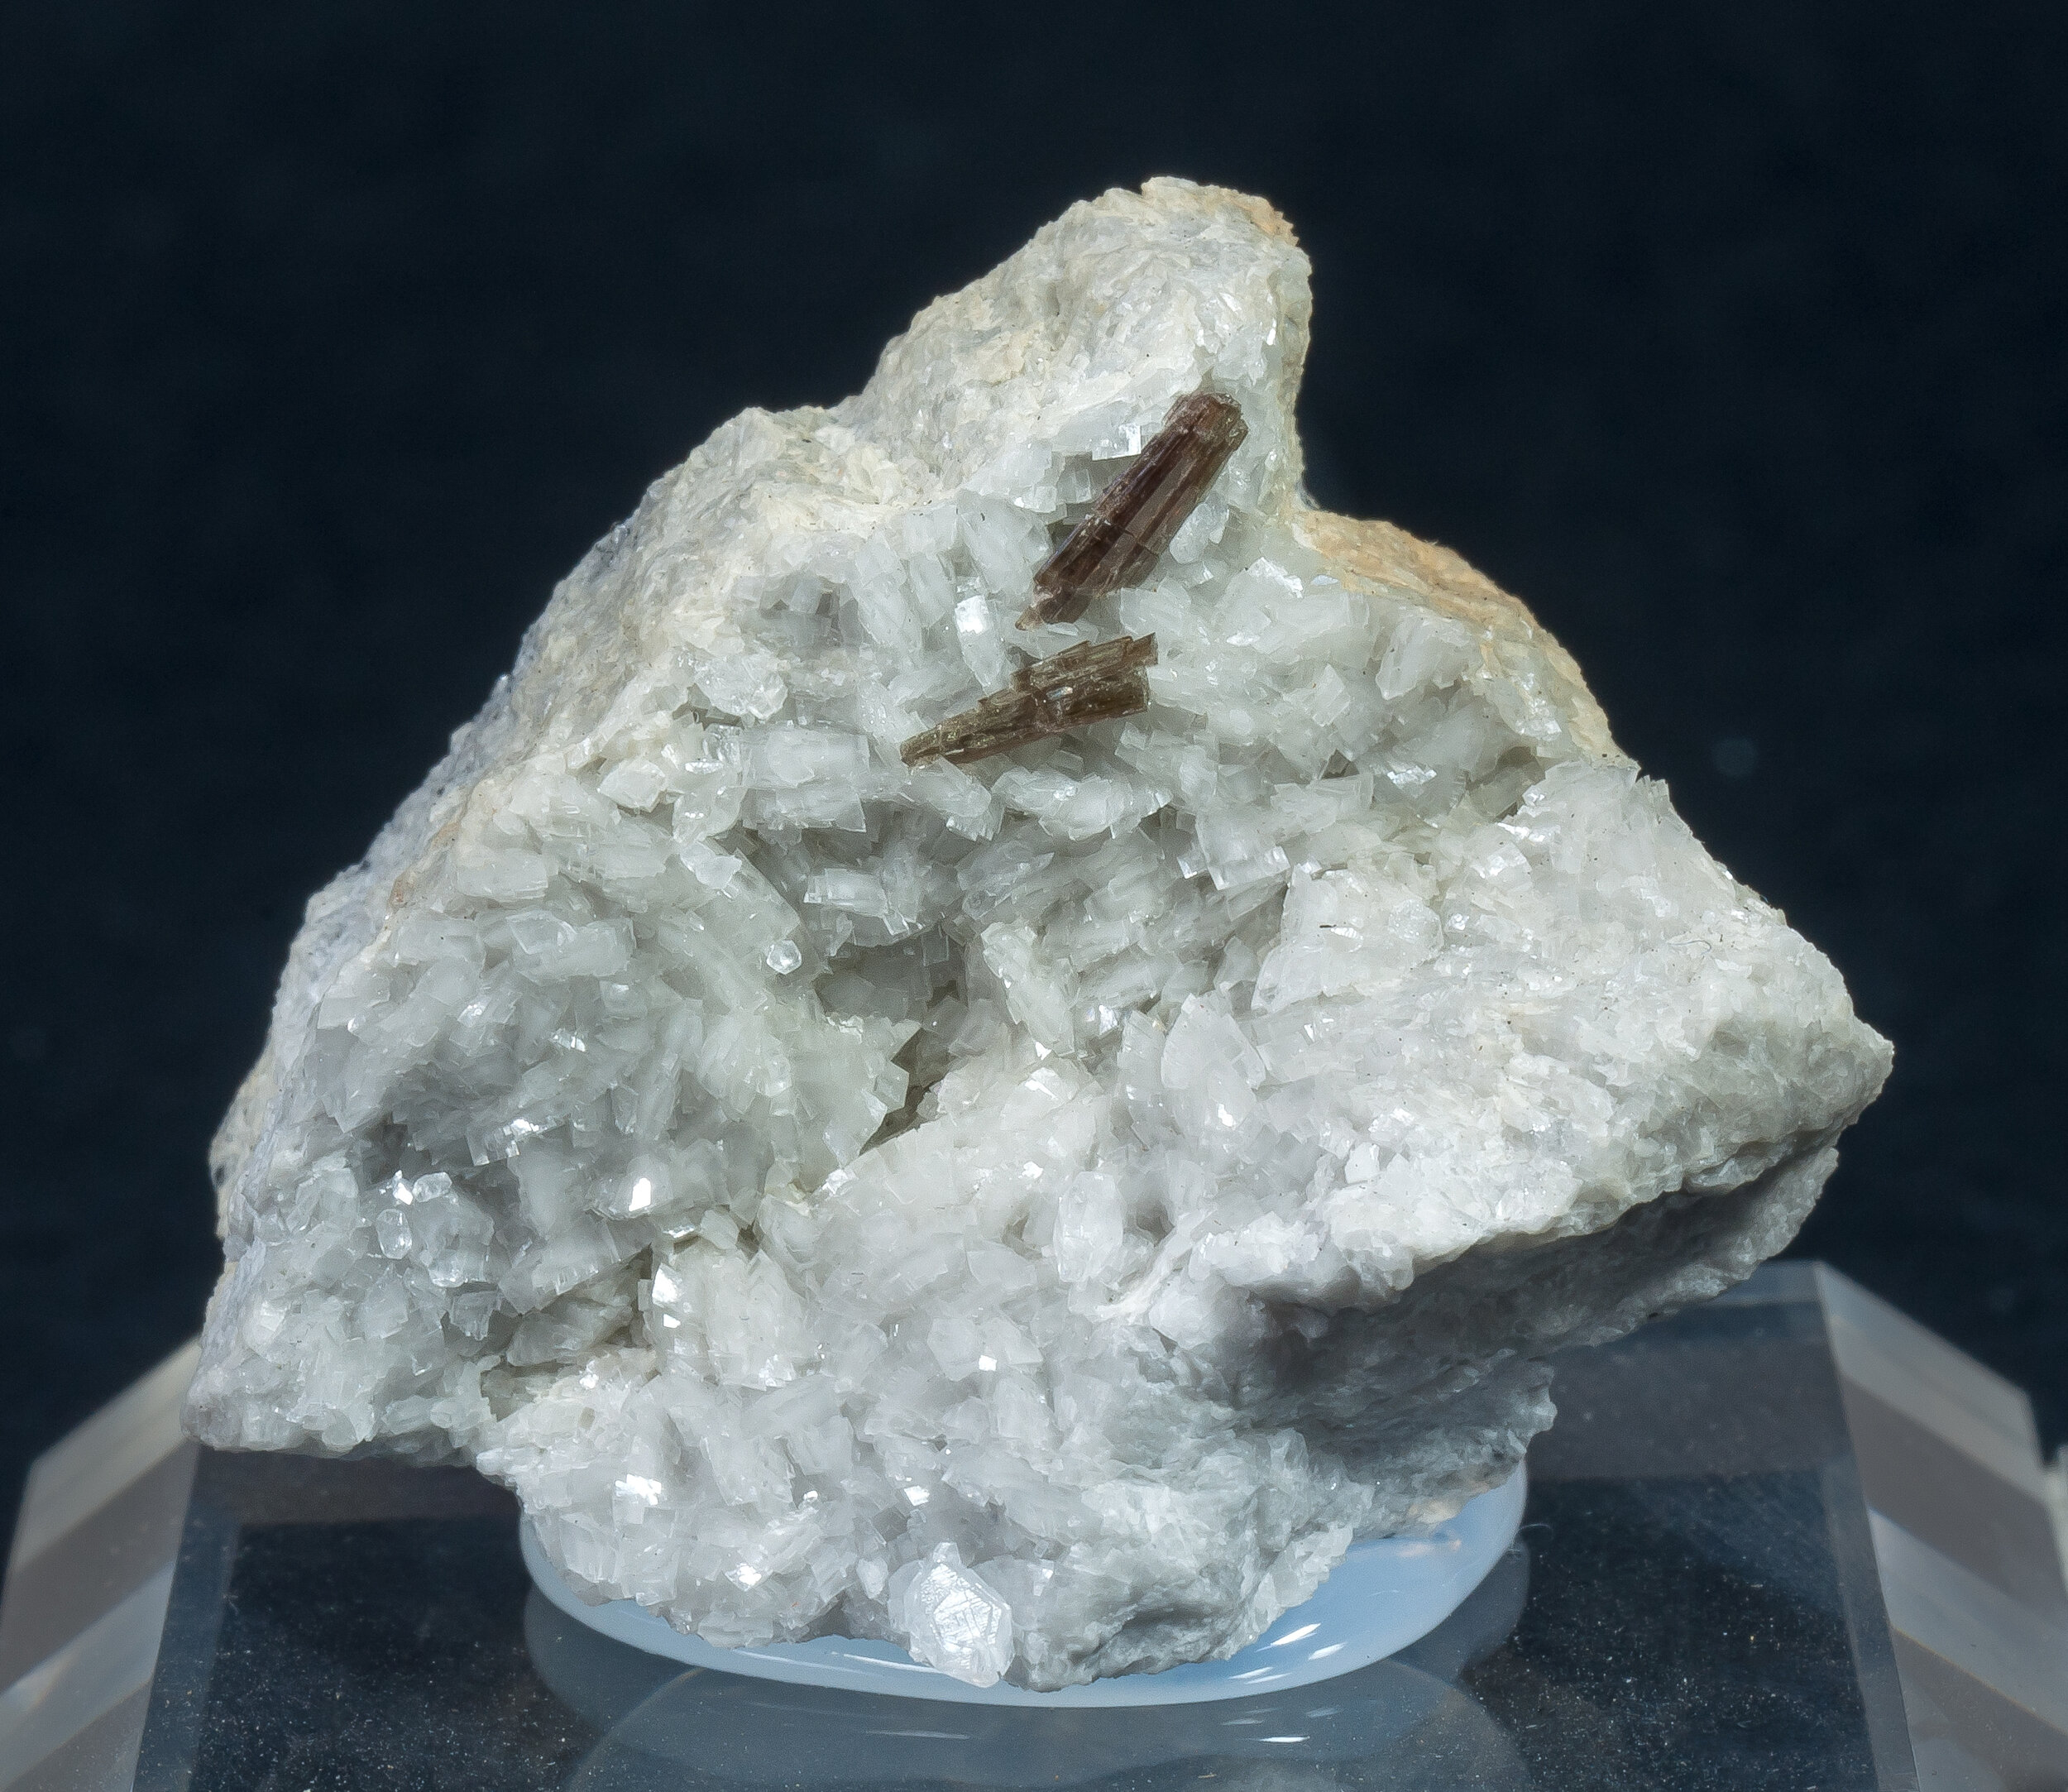 specimens/s_imagesCM/Allanite-Ce-10NM8-1.jpg